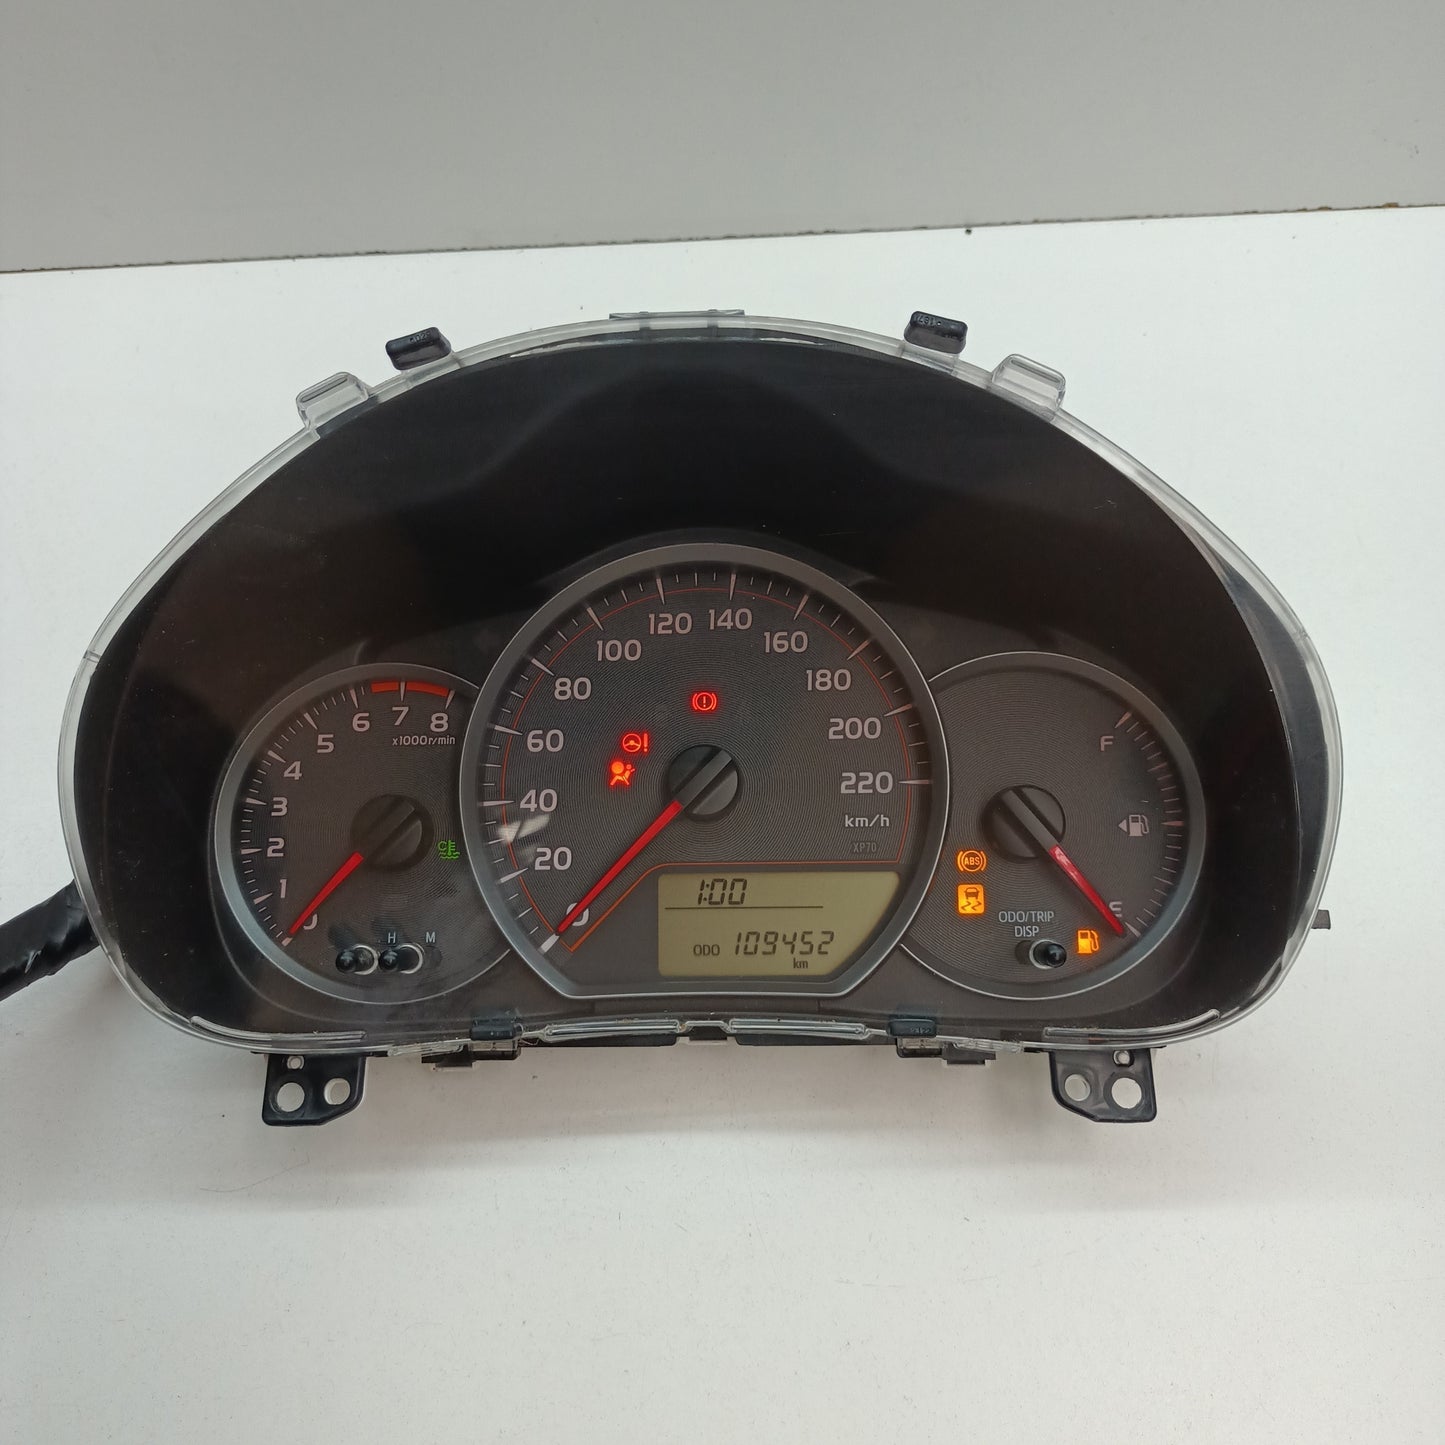 Toyota Yaris Hatchback Instrument Cluster NCP13# 2011 2012 2013 2014 109452 km